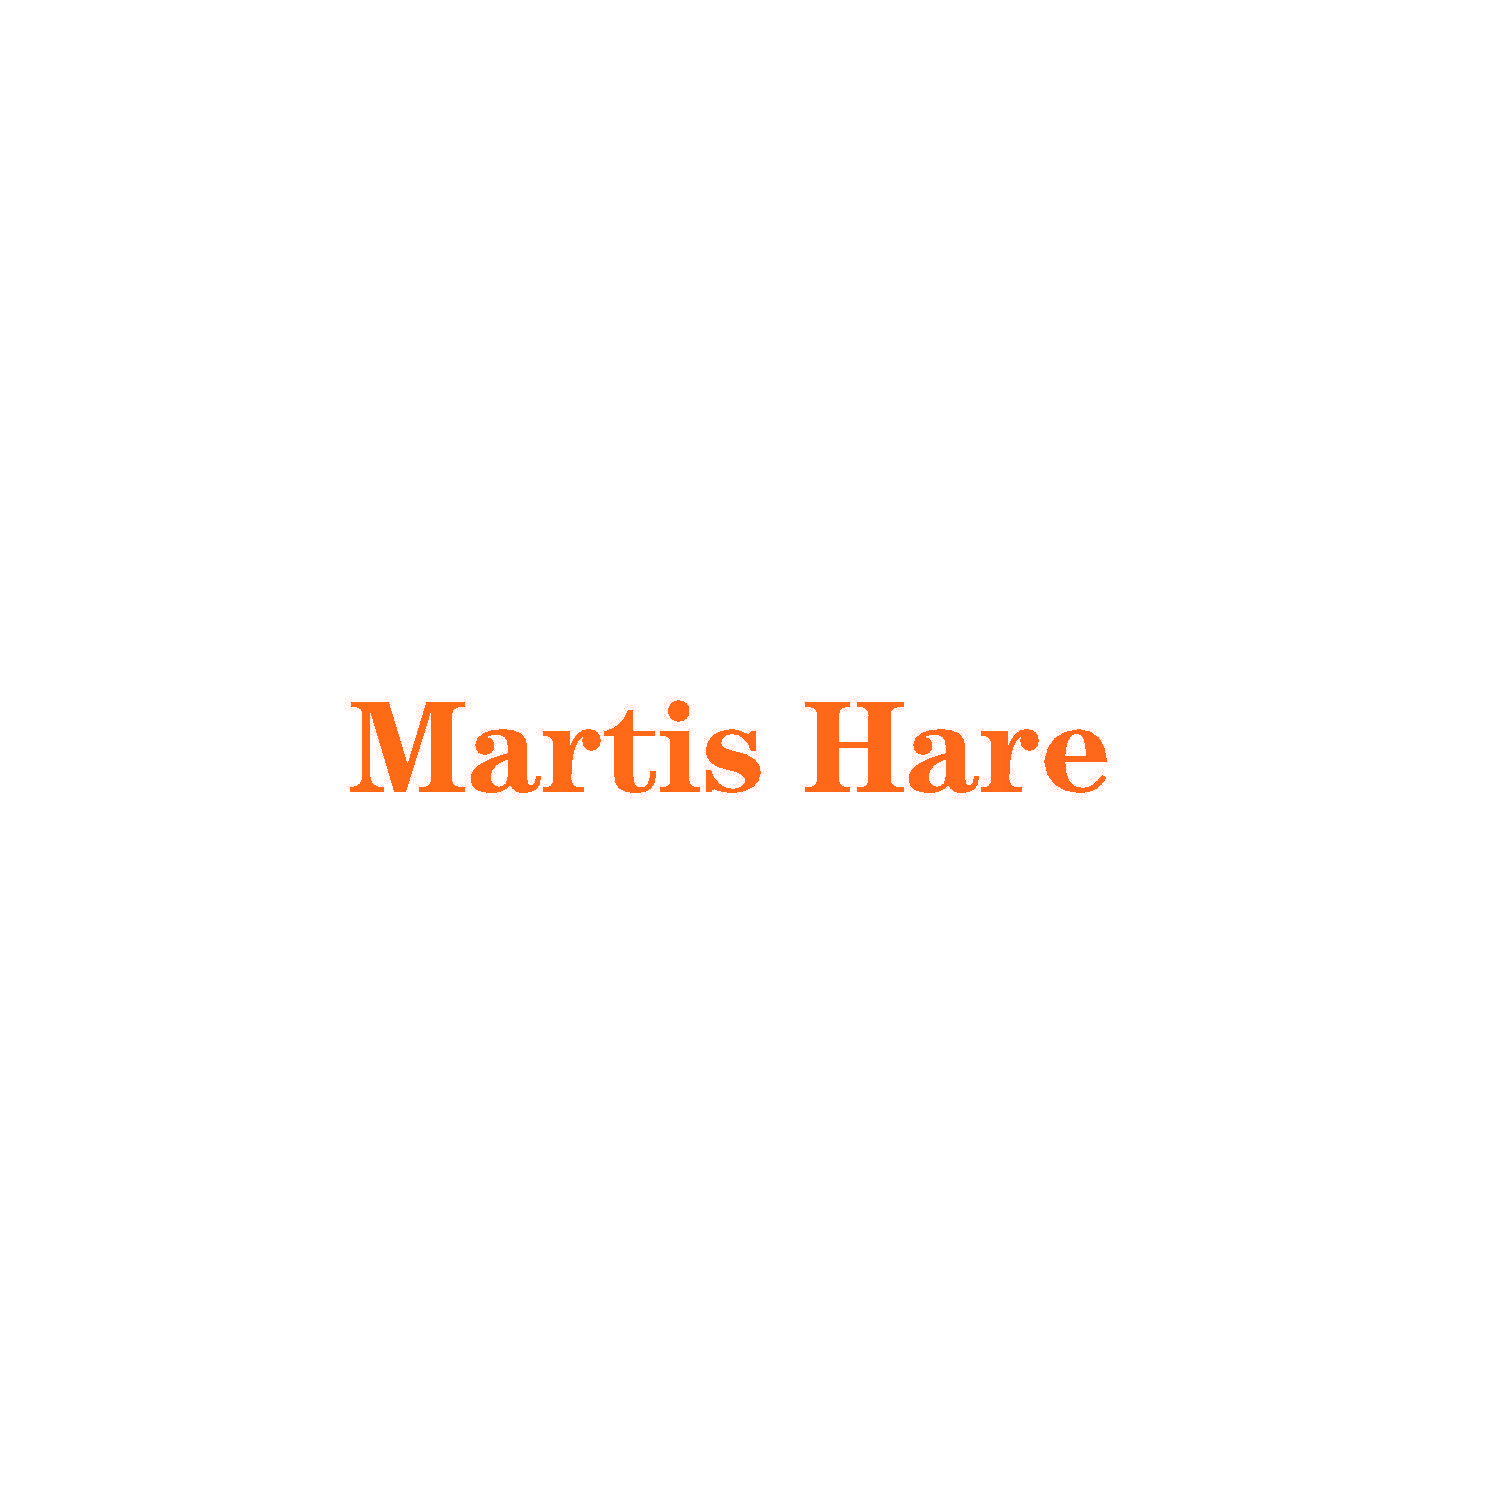 Martis Hare